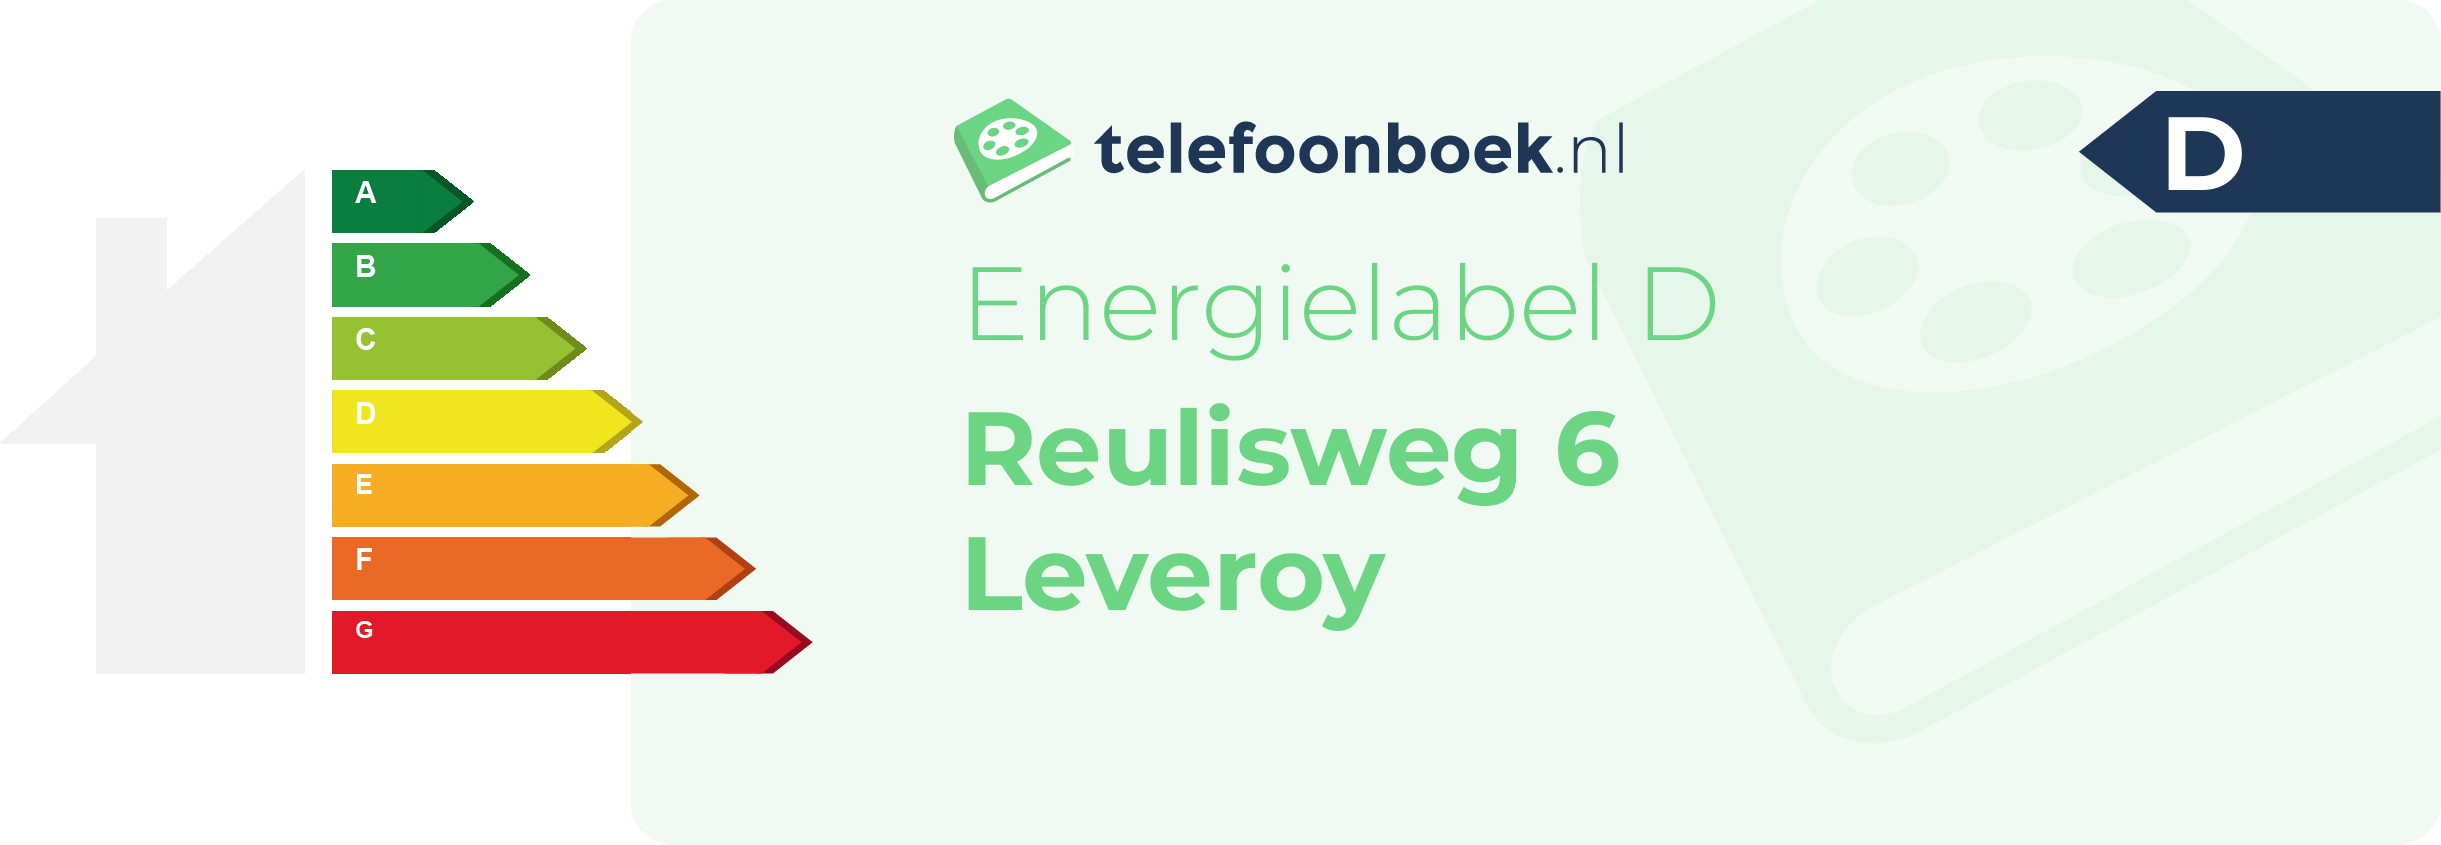 Energielabel Reulisweg 6 Leveroy